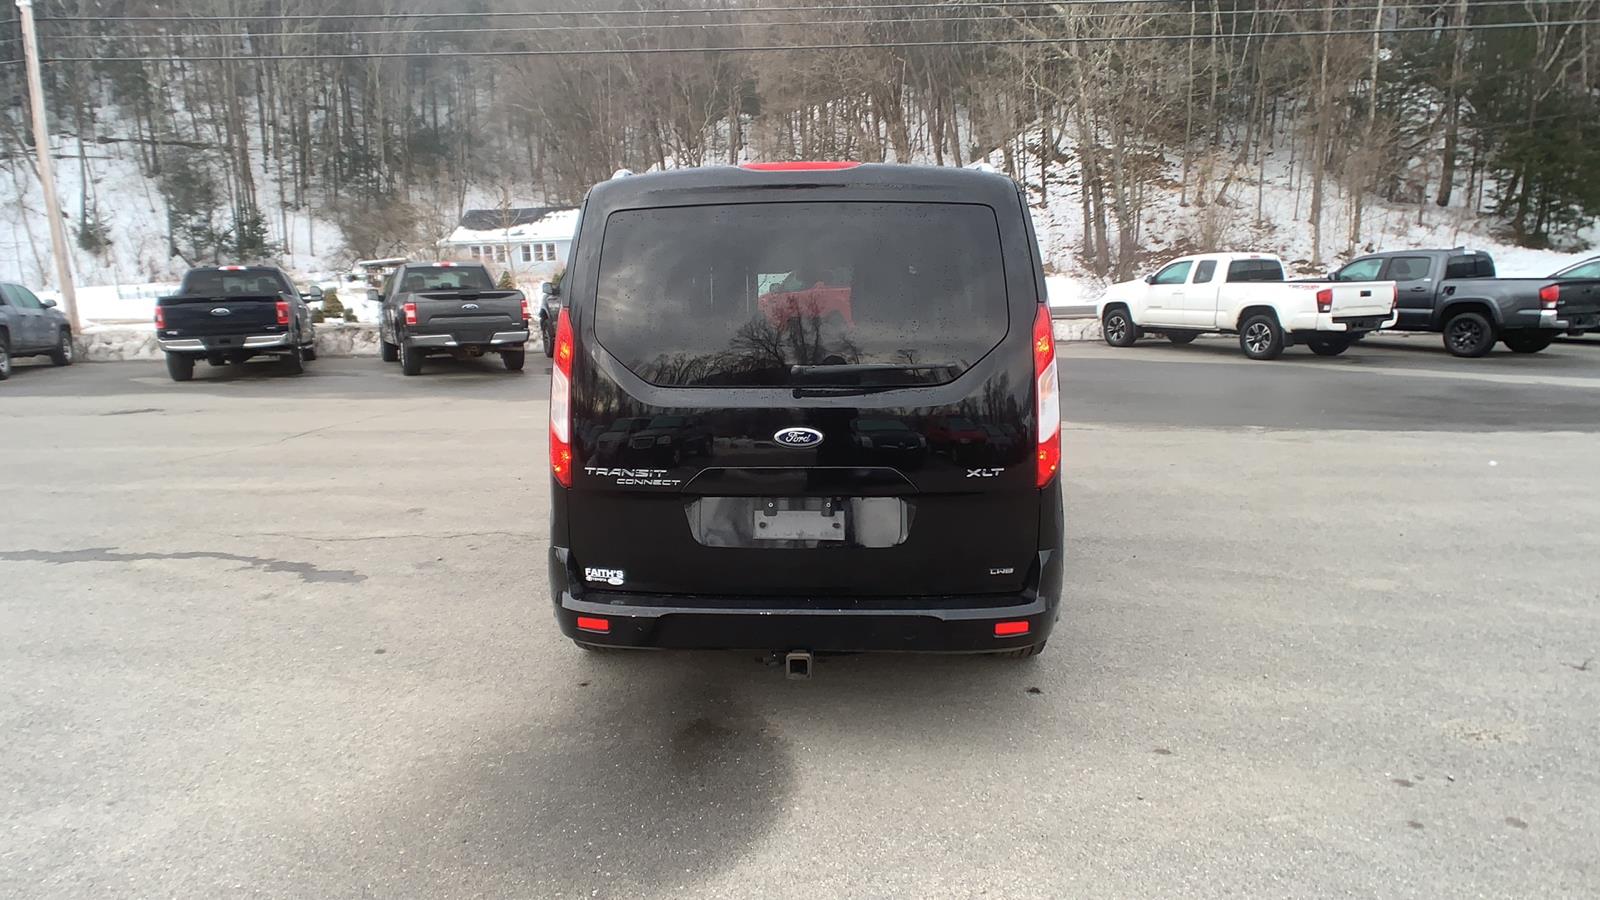 2016 Ford Transit Connect Wagon Full-size Passenger Van